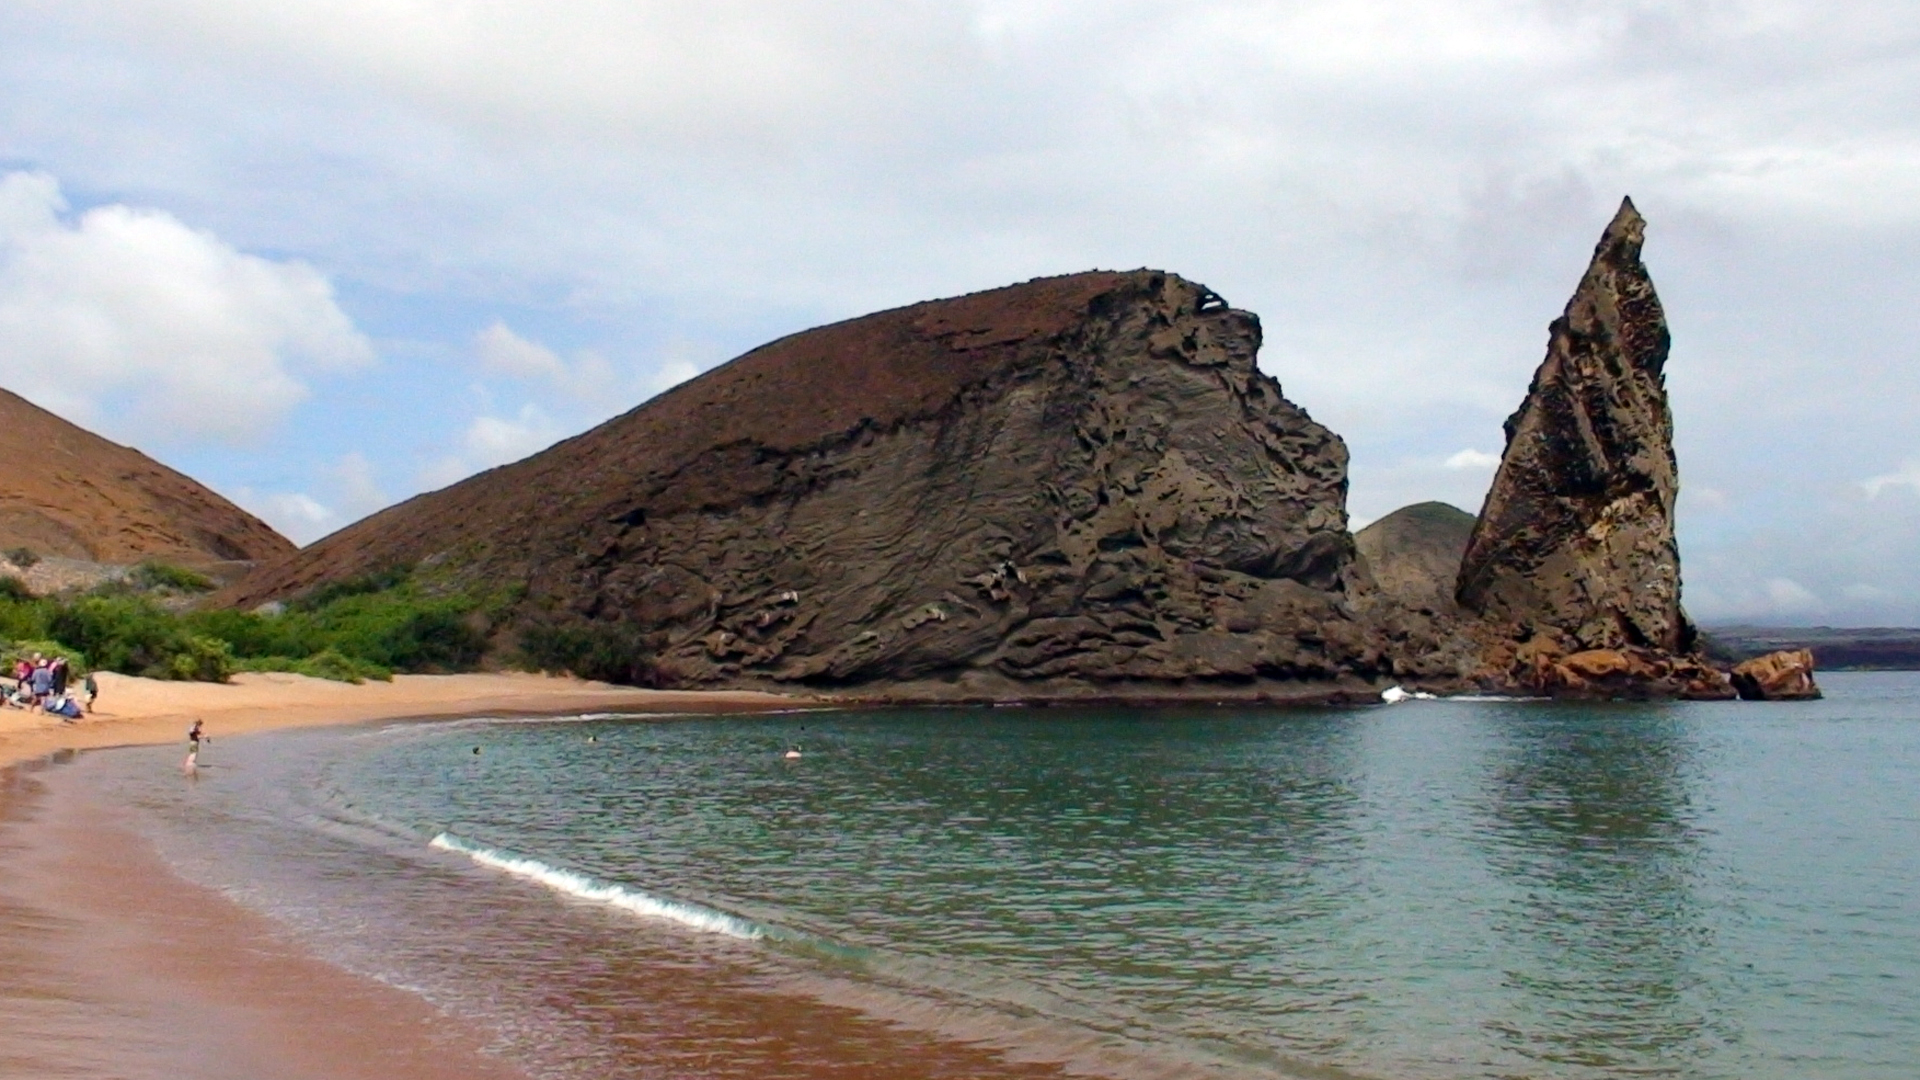 wp-content/uploads/itineraries/Galapagos/032510galapagos_bartolome_landscape (4).JPG